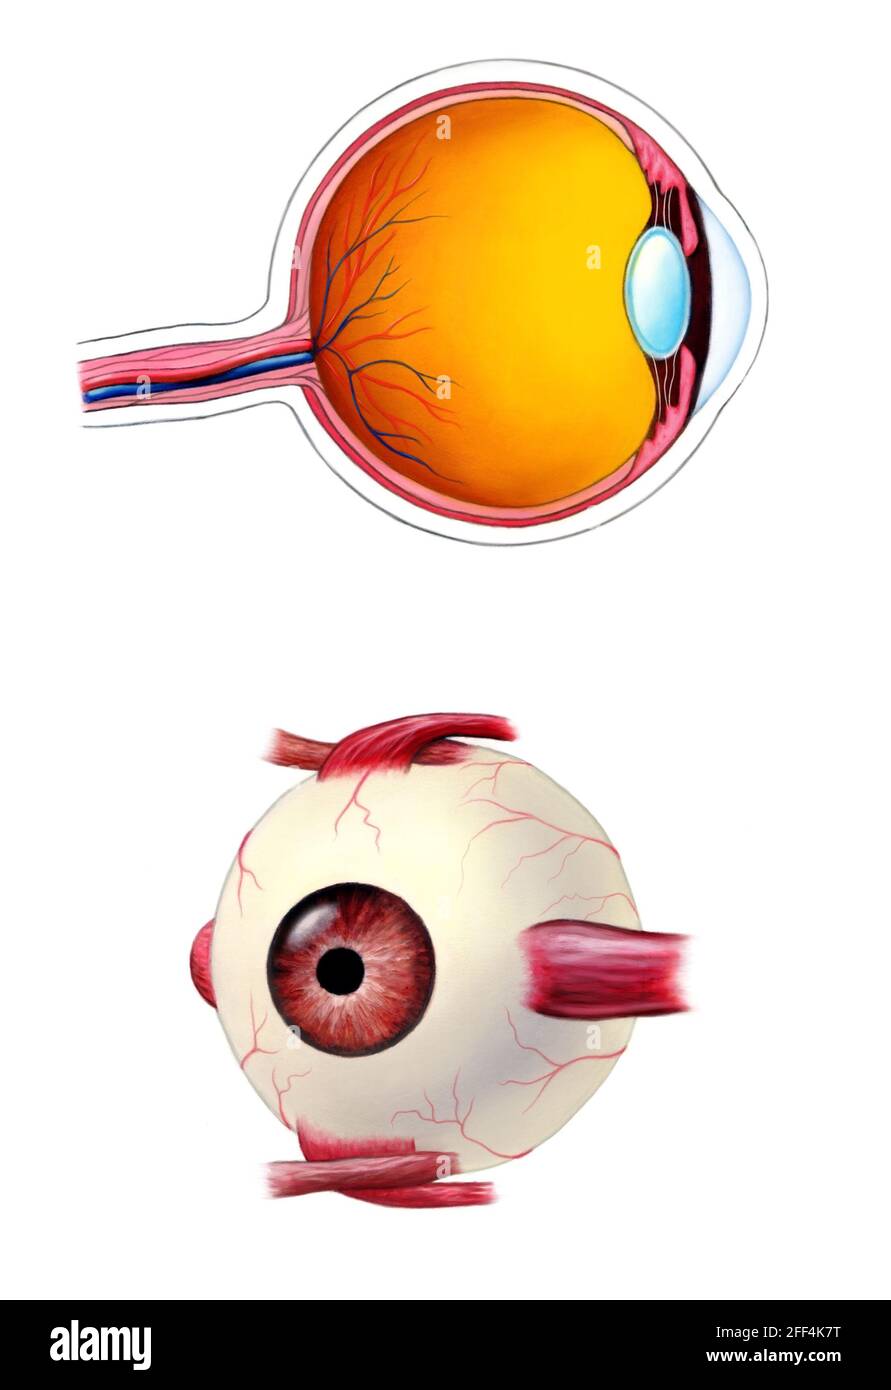 Human eye interior and exterior anatomy. Mixed media illustration. Stock Photo